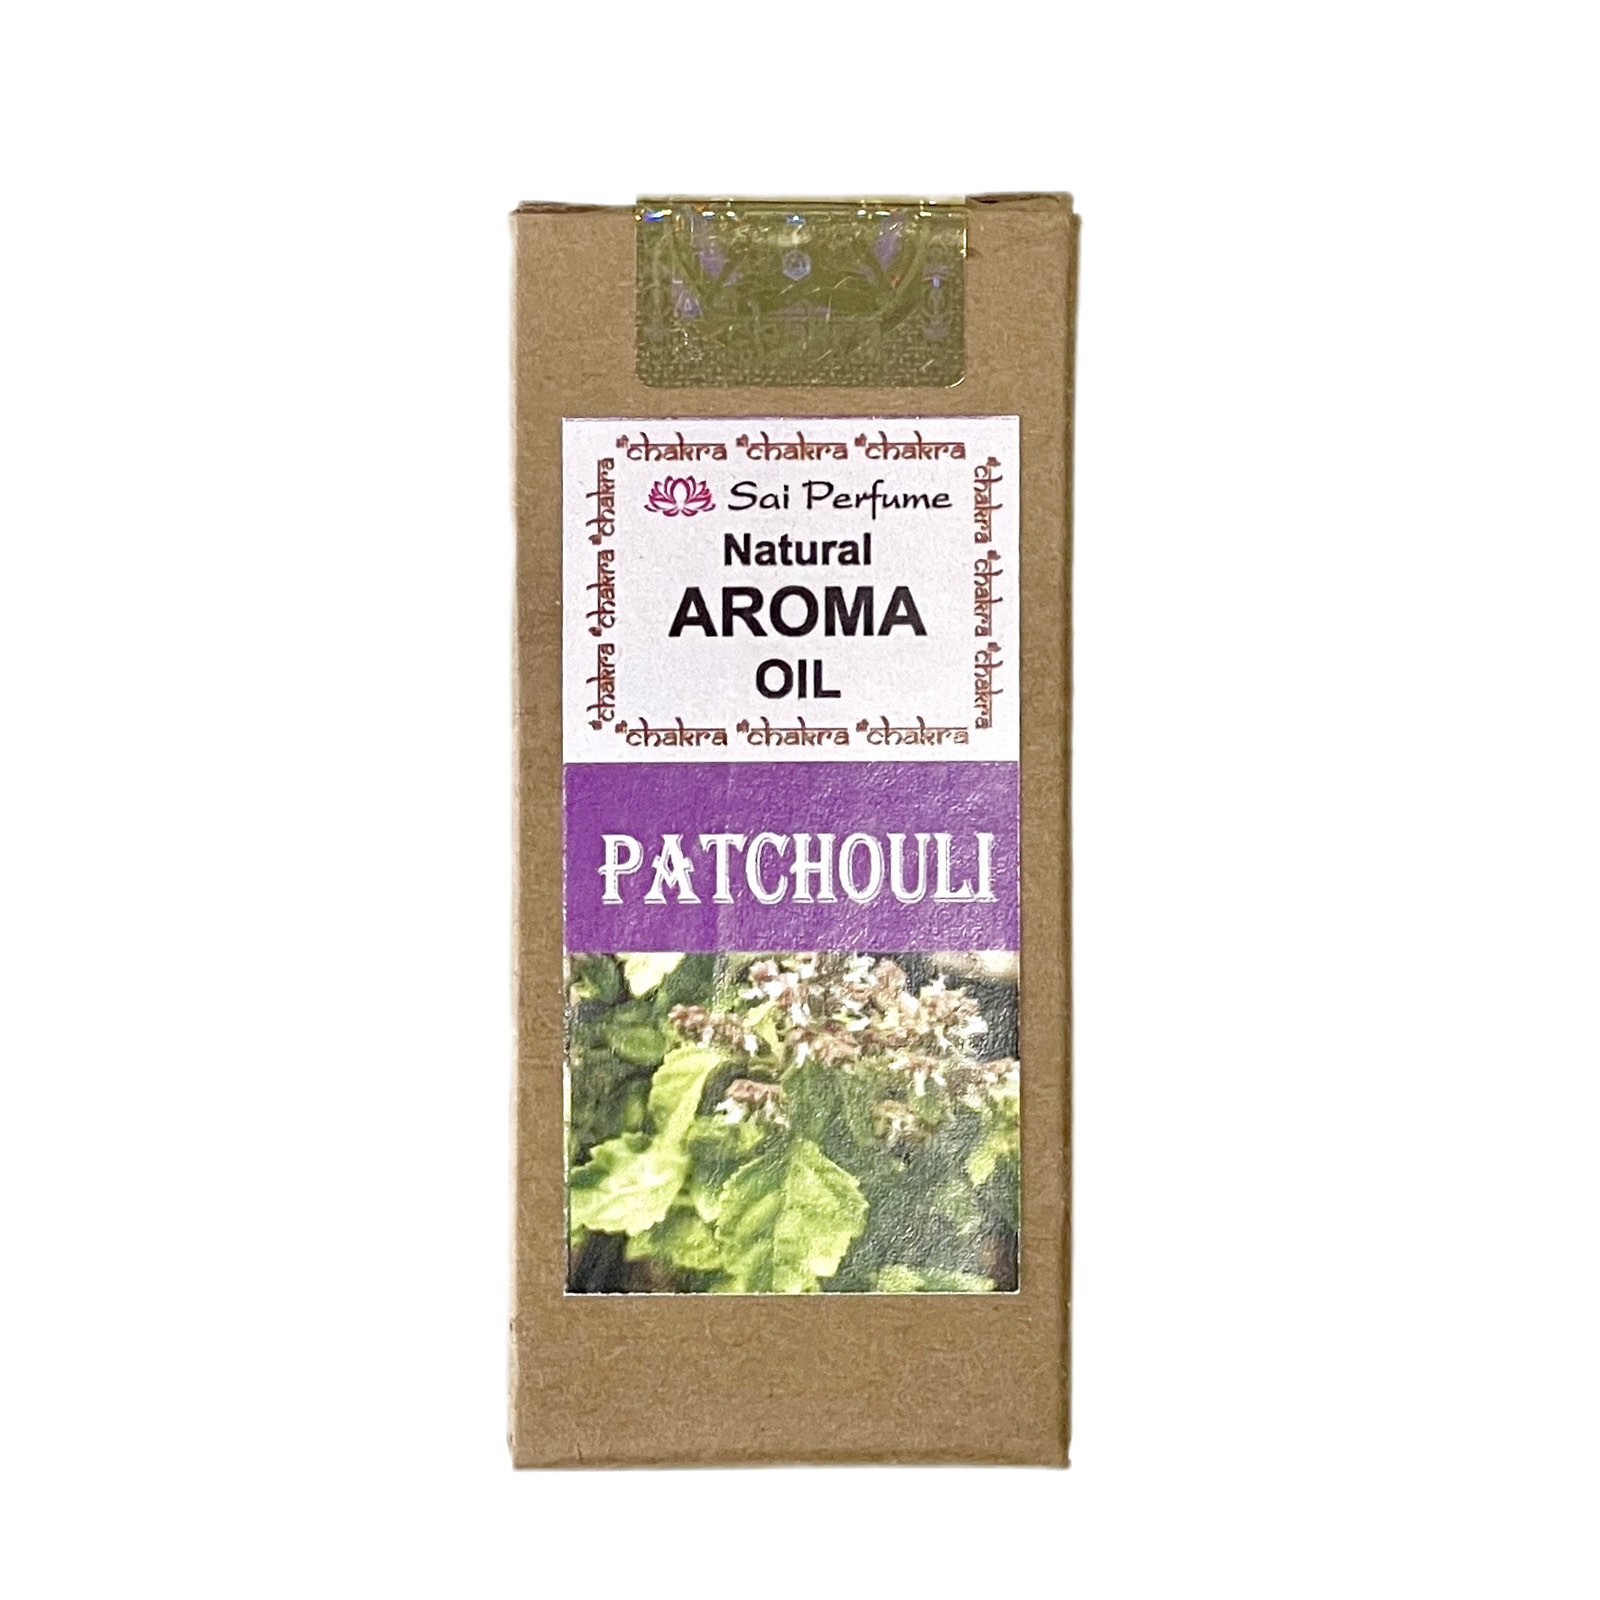 Natural Aroma Oil PATCHOULI, Shri Chakra (Натуральное ароматическое масло ПАЧУЛИ, Шри Чакра), 10 мл.